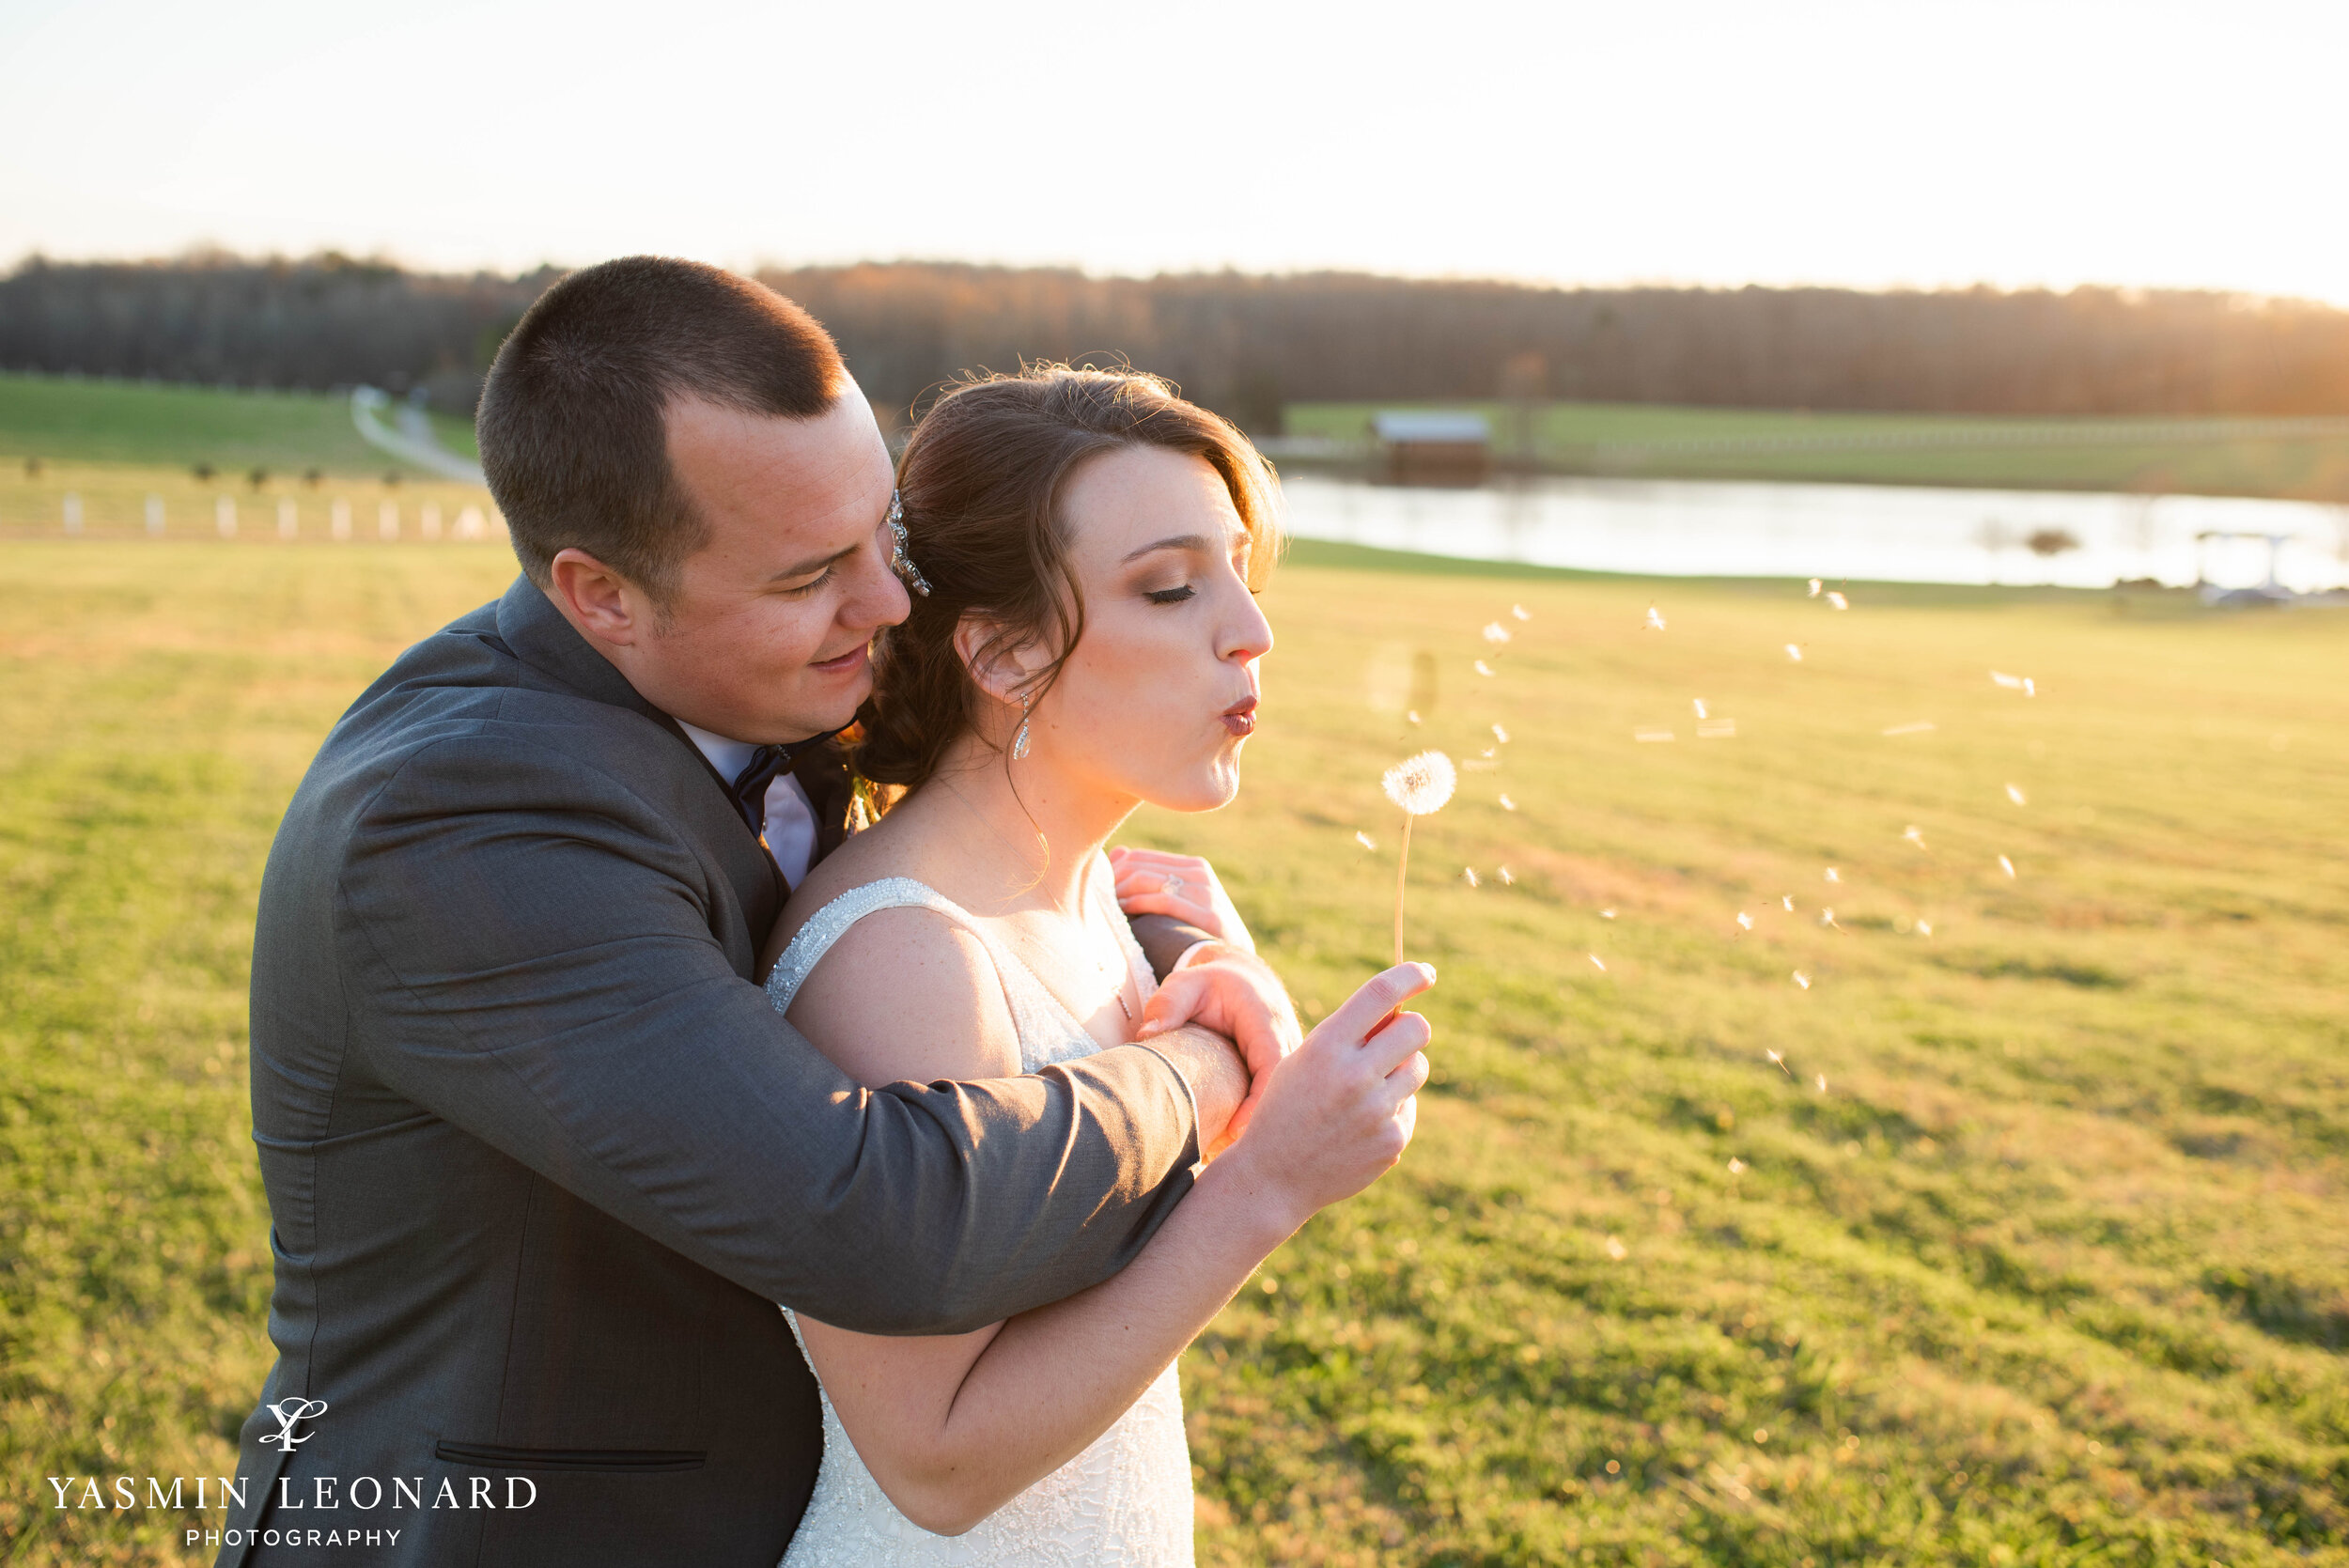 Jared and Katy - Adaumont Farms - High Point Weddings - NC Barn Weddings - Yasmin Leonard Photography-44.jpg